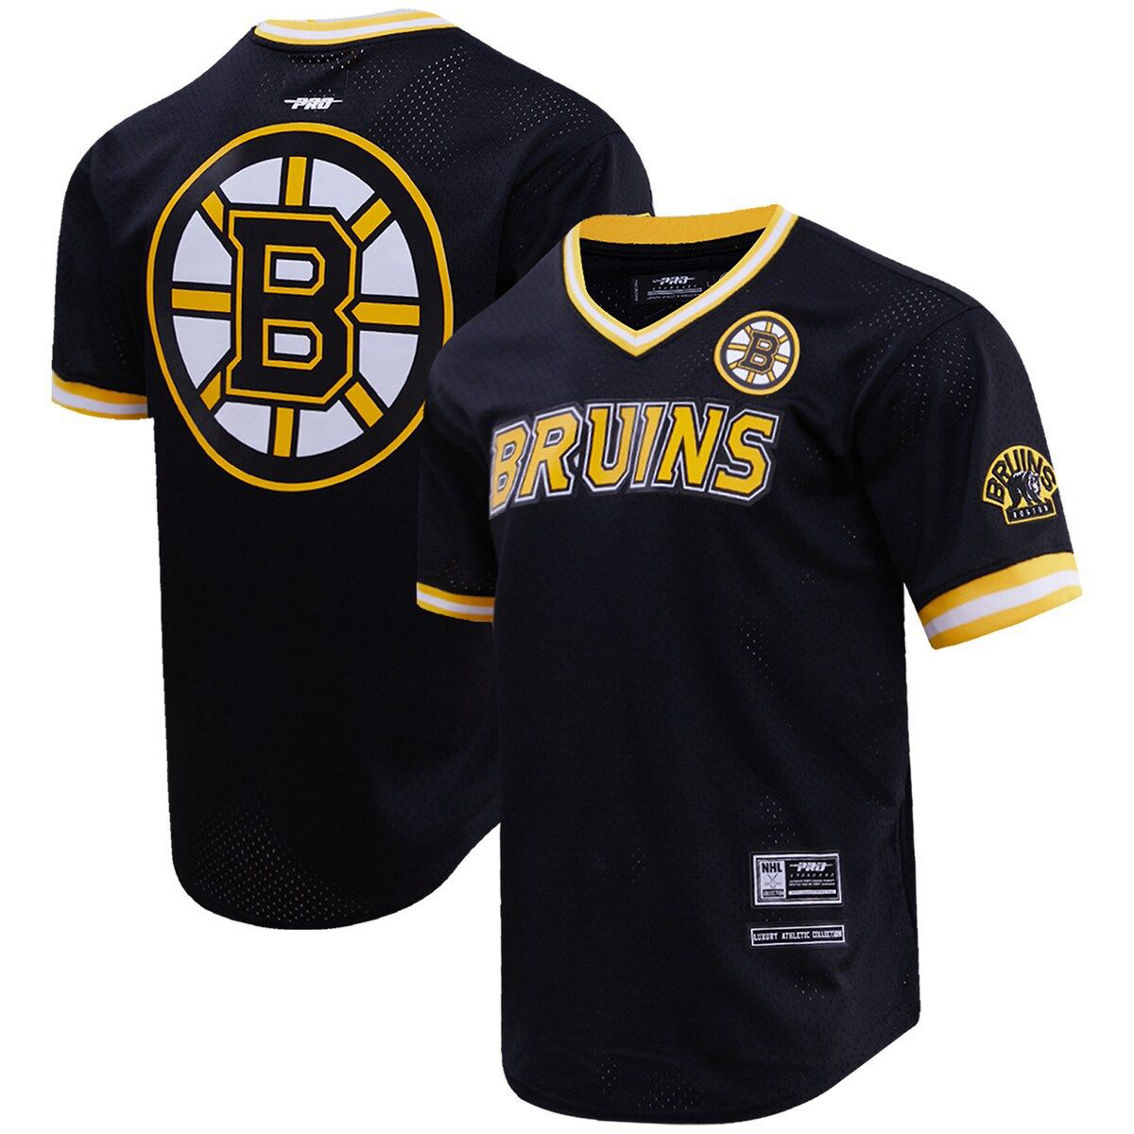 Pro Standard Men's Black Boston Bruins Classic Mesh V-Neck T-Shirt - Image 2 of 4